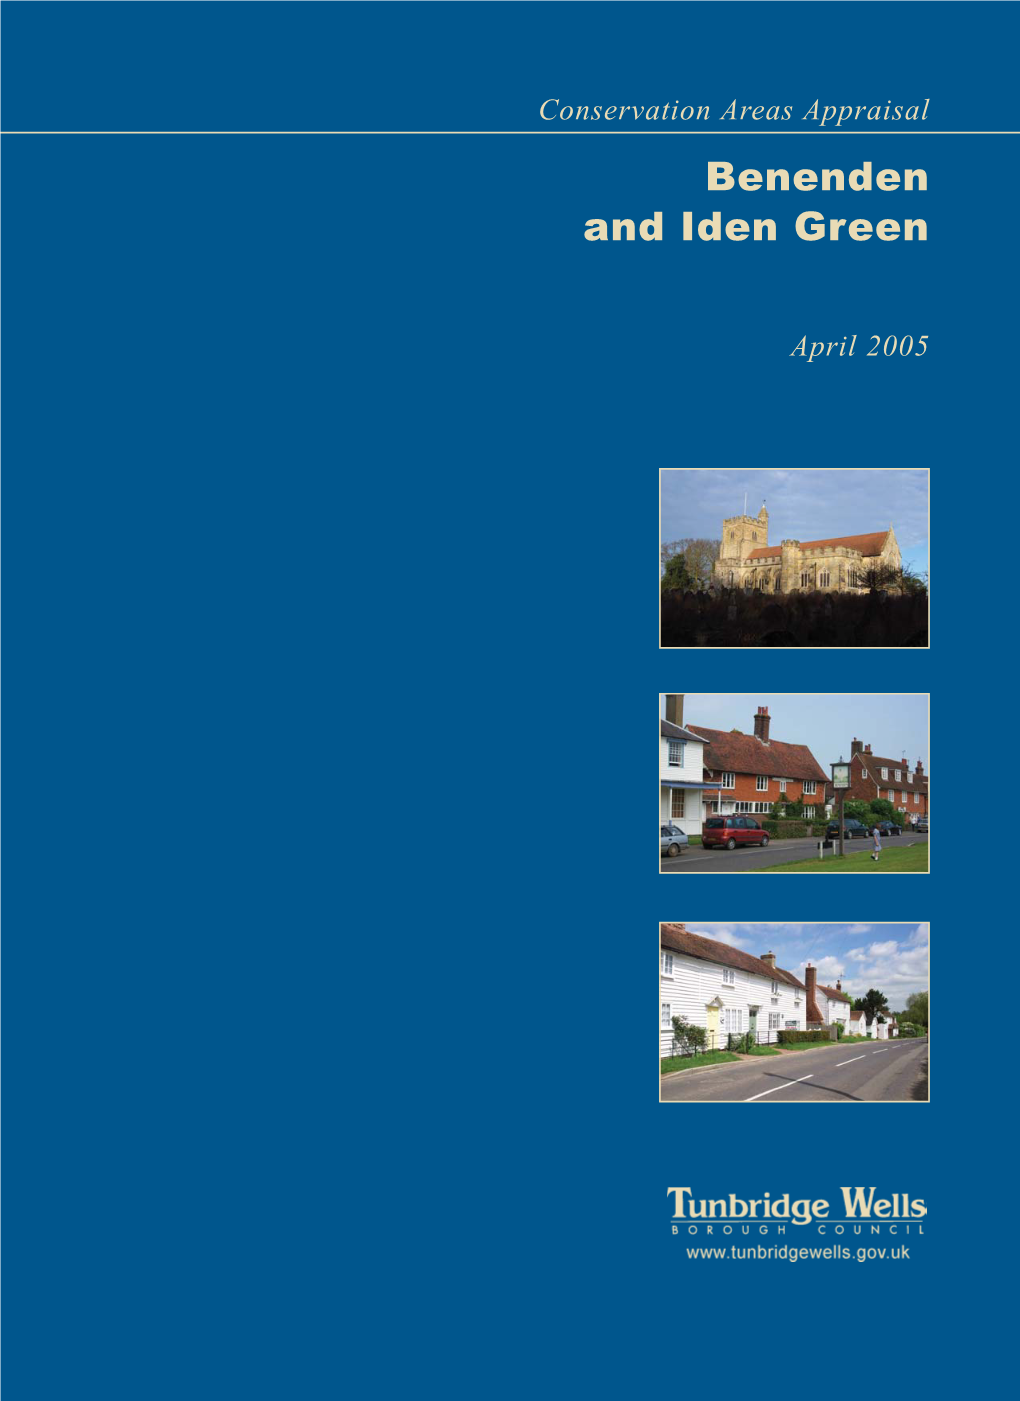 Benenden and Iden Green Conservation Areas Appraisal